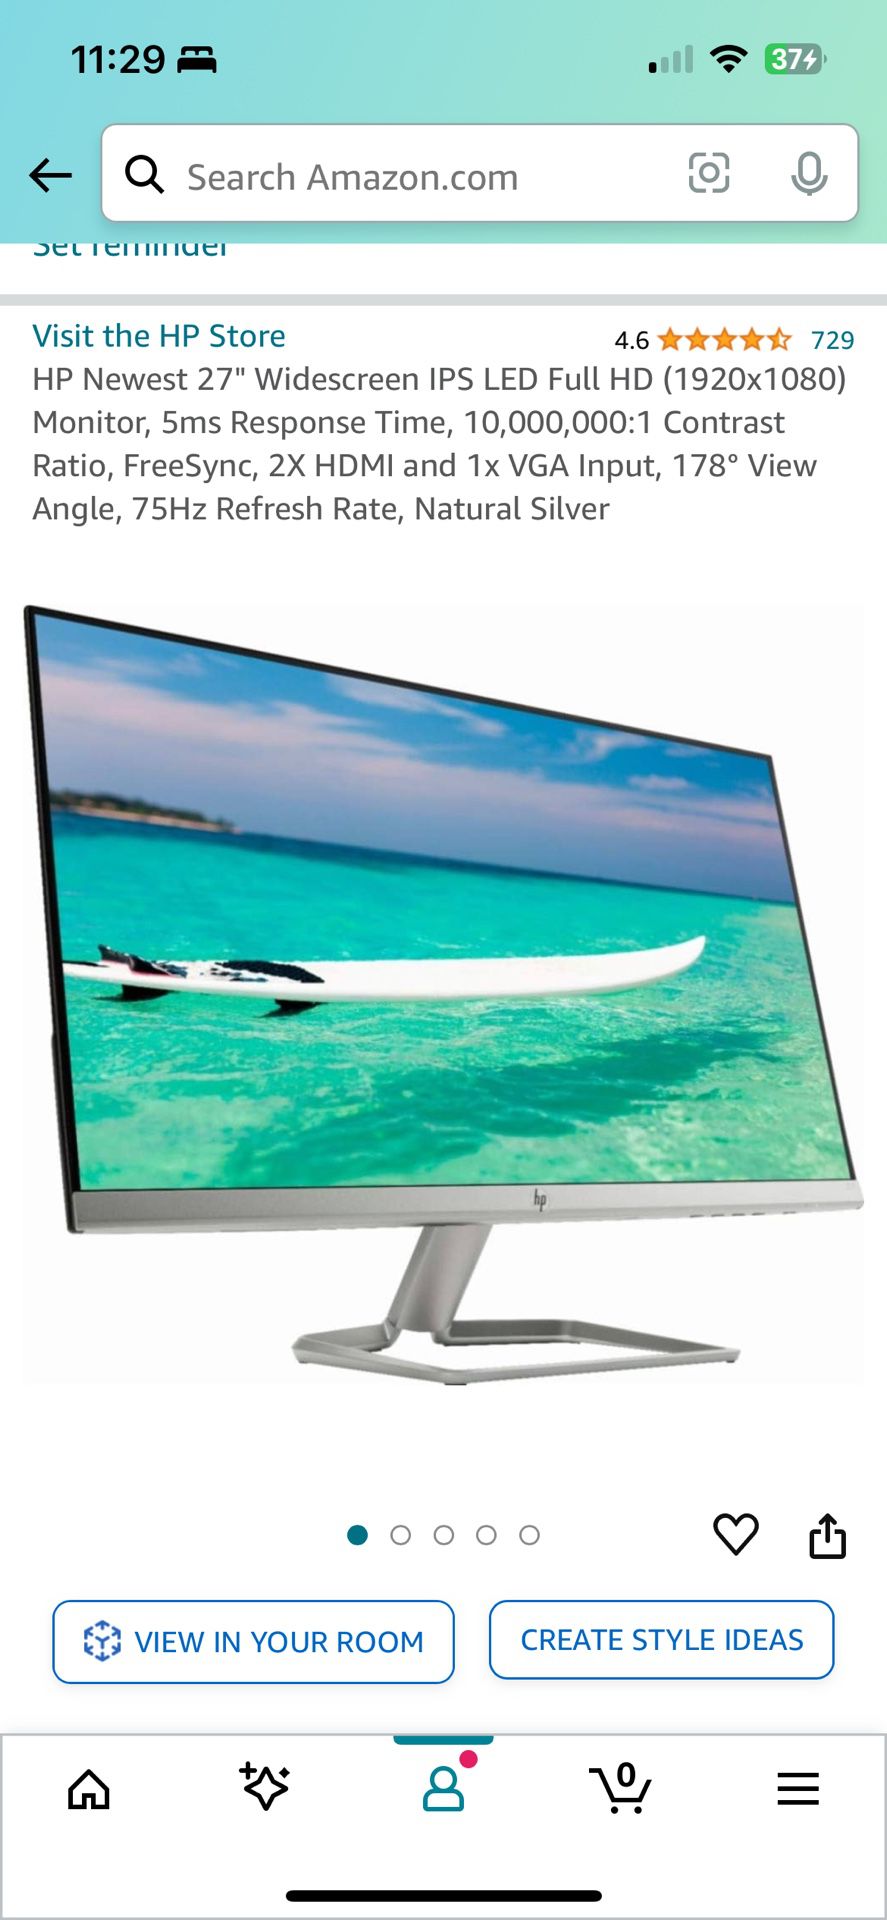 27” 1080p HP monitors